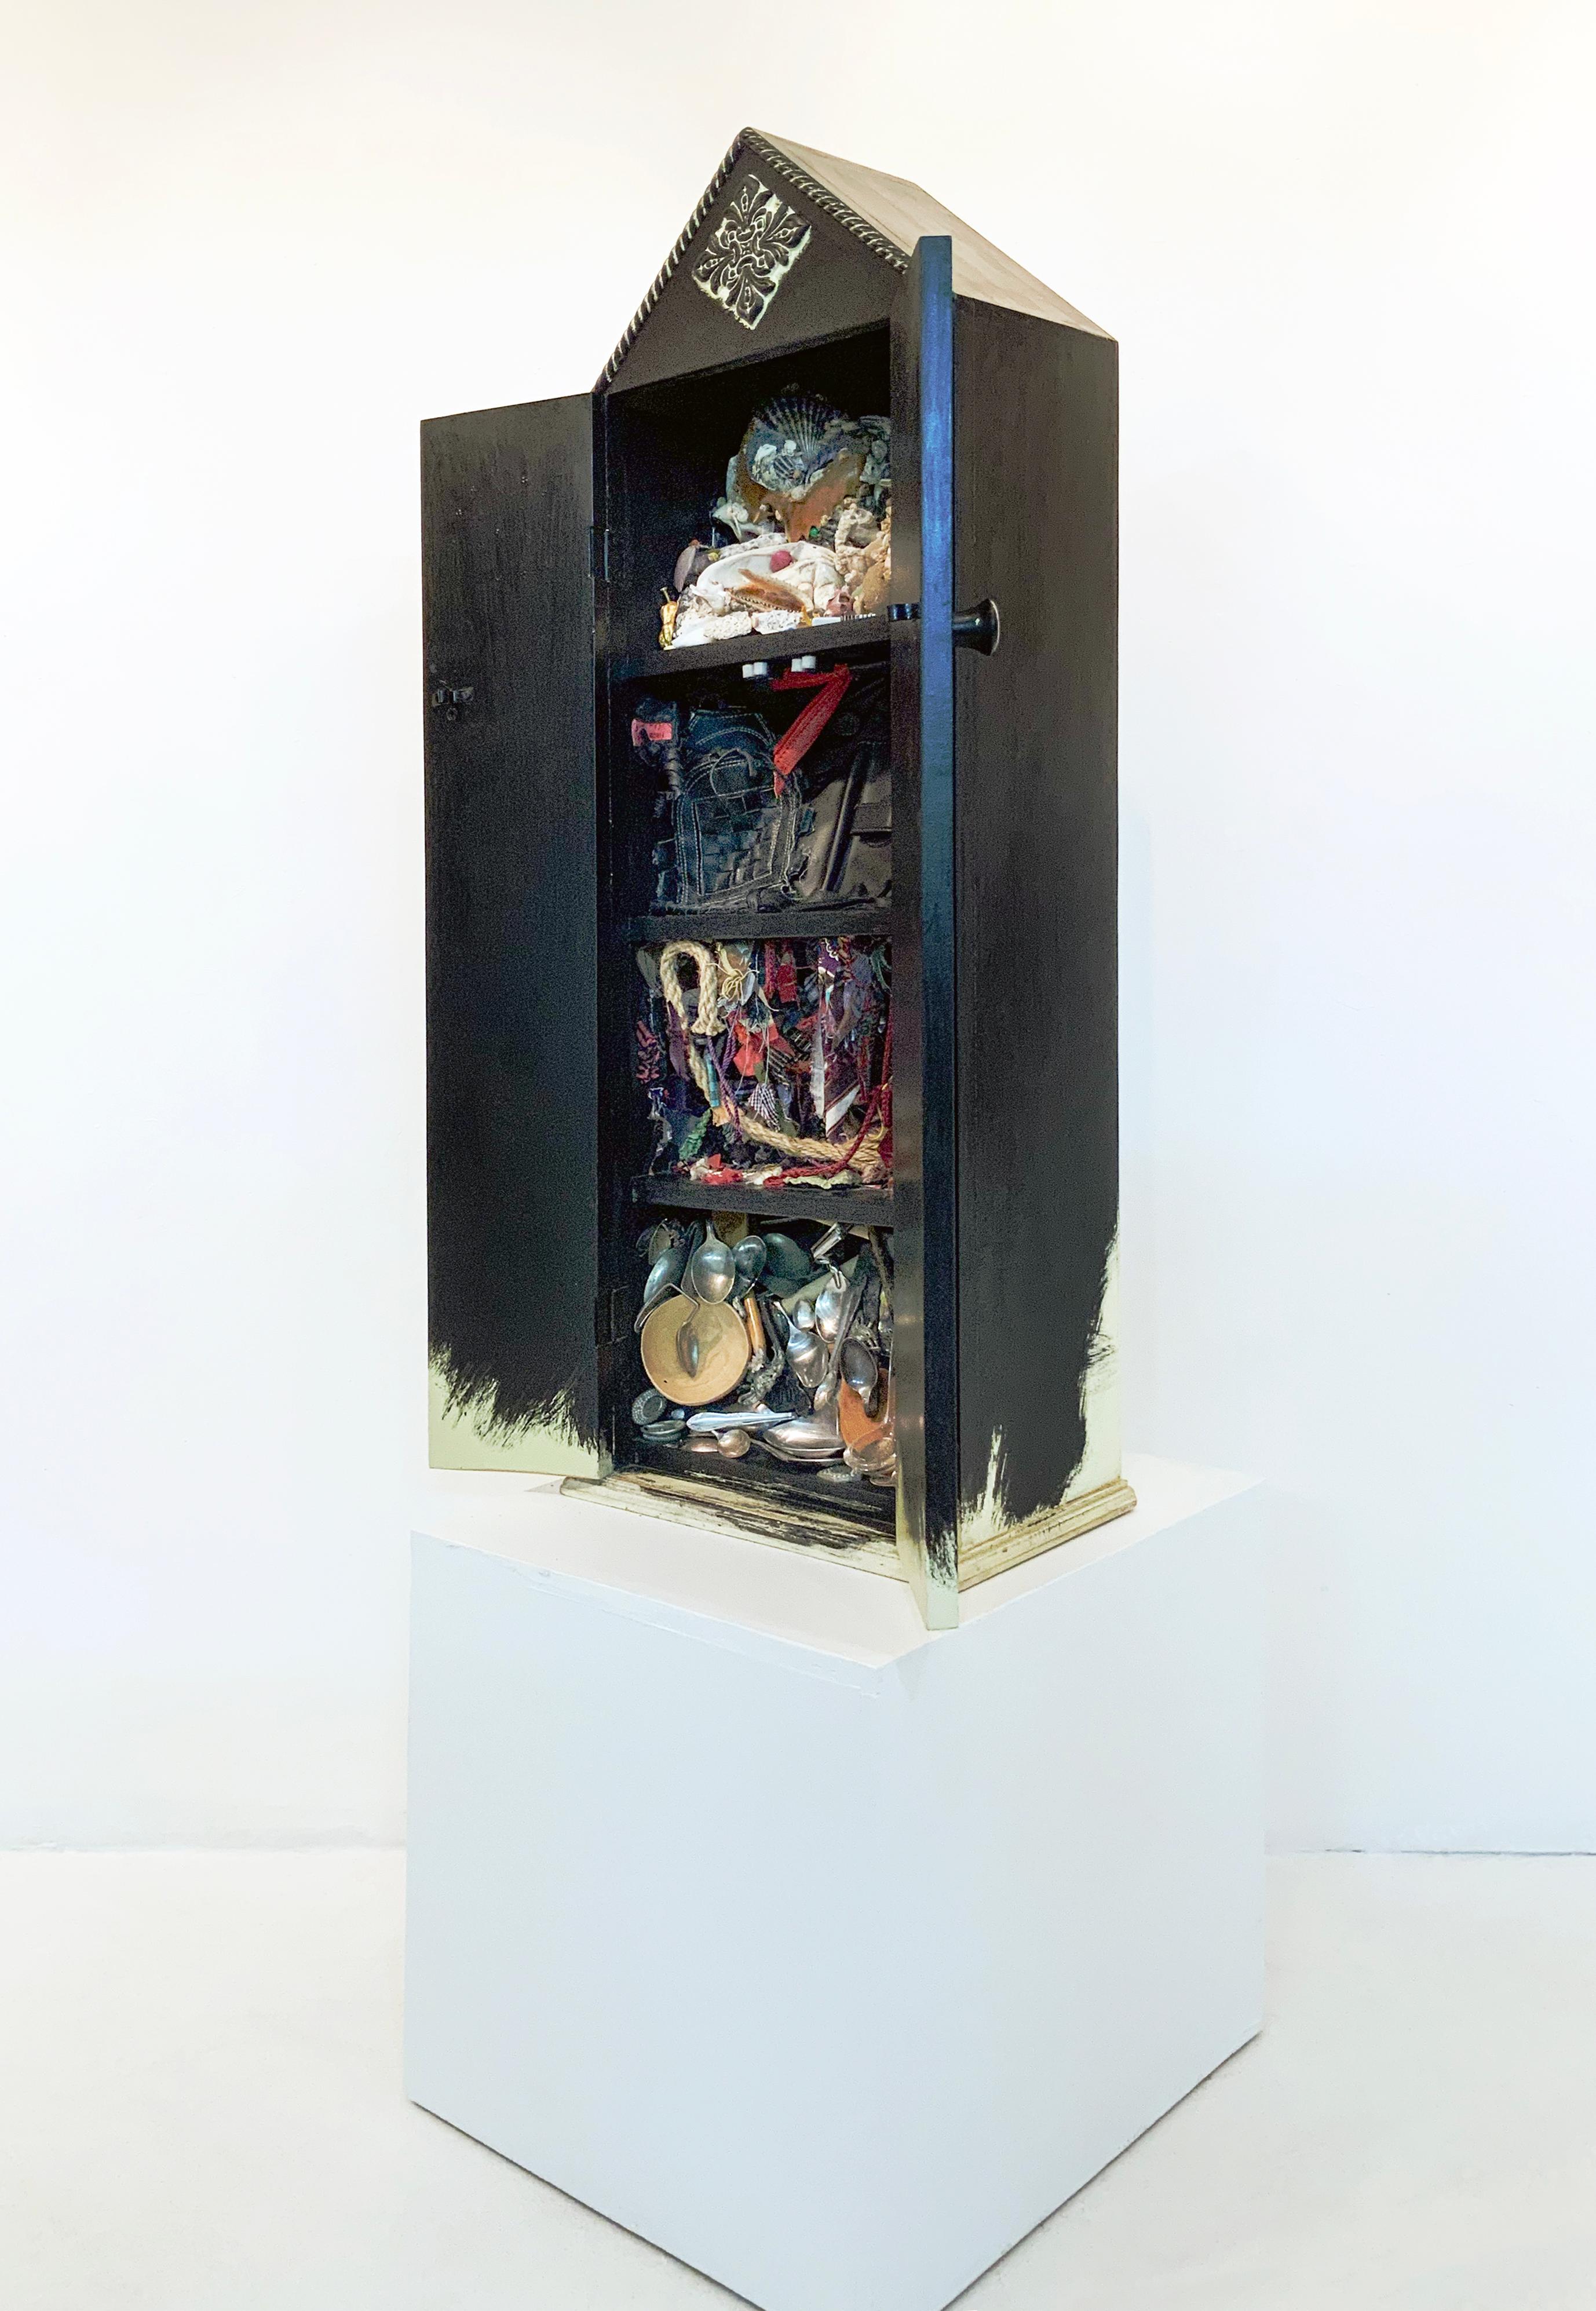 Quatre histoires 862  - Cabinet de curiosités, sculpture contemporaine Wunderkammer - Sculpture de Linda Stein